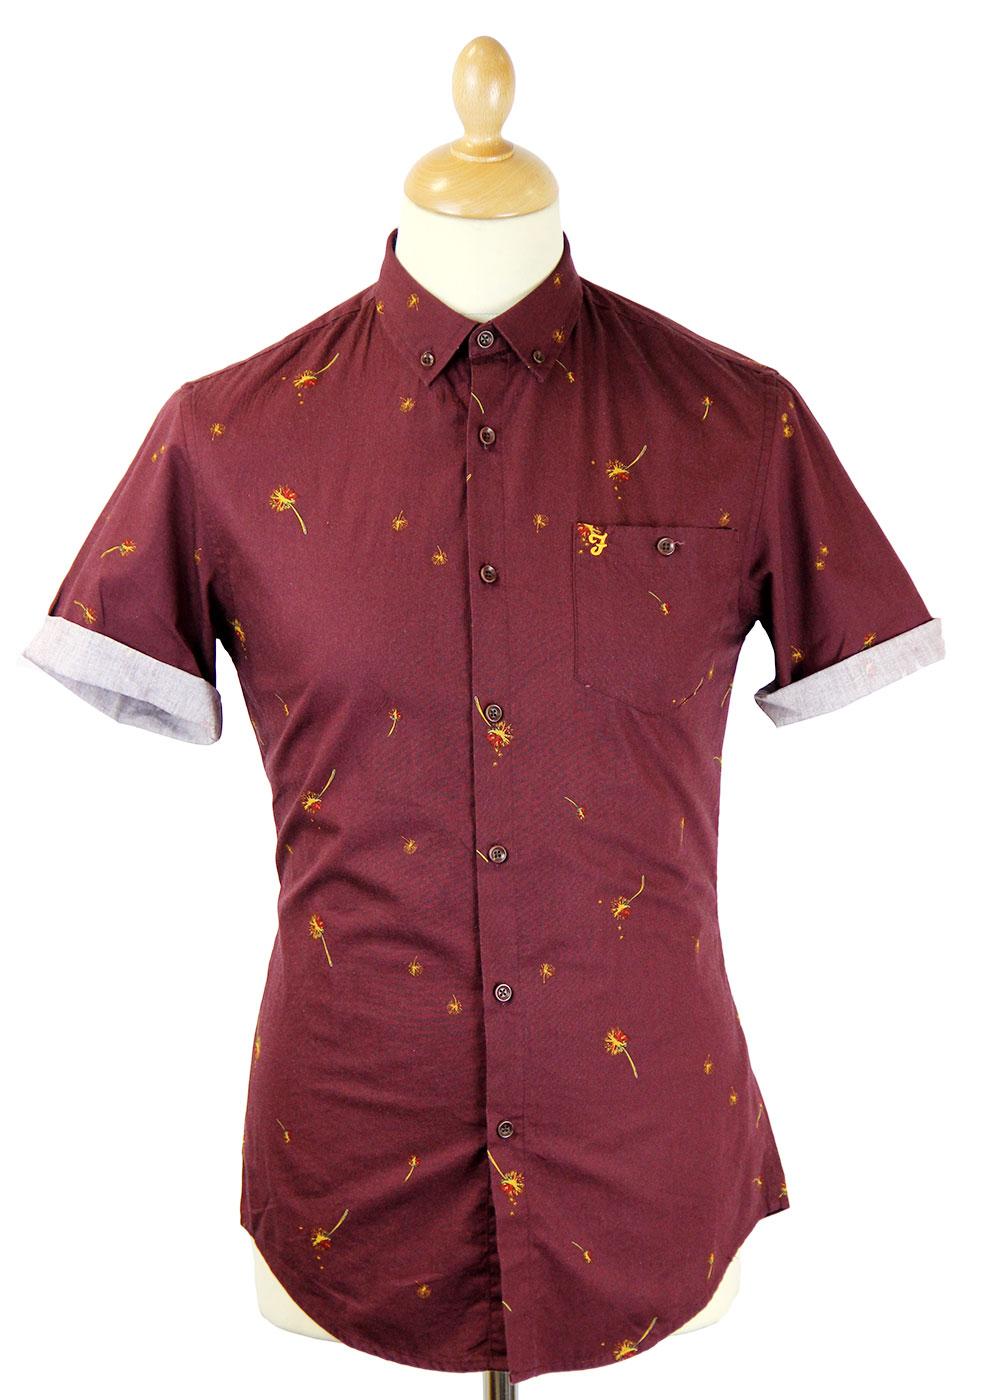 Gunnerside FARAH VINTAGE Retro Mod Floral Shirt C